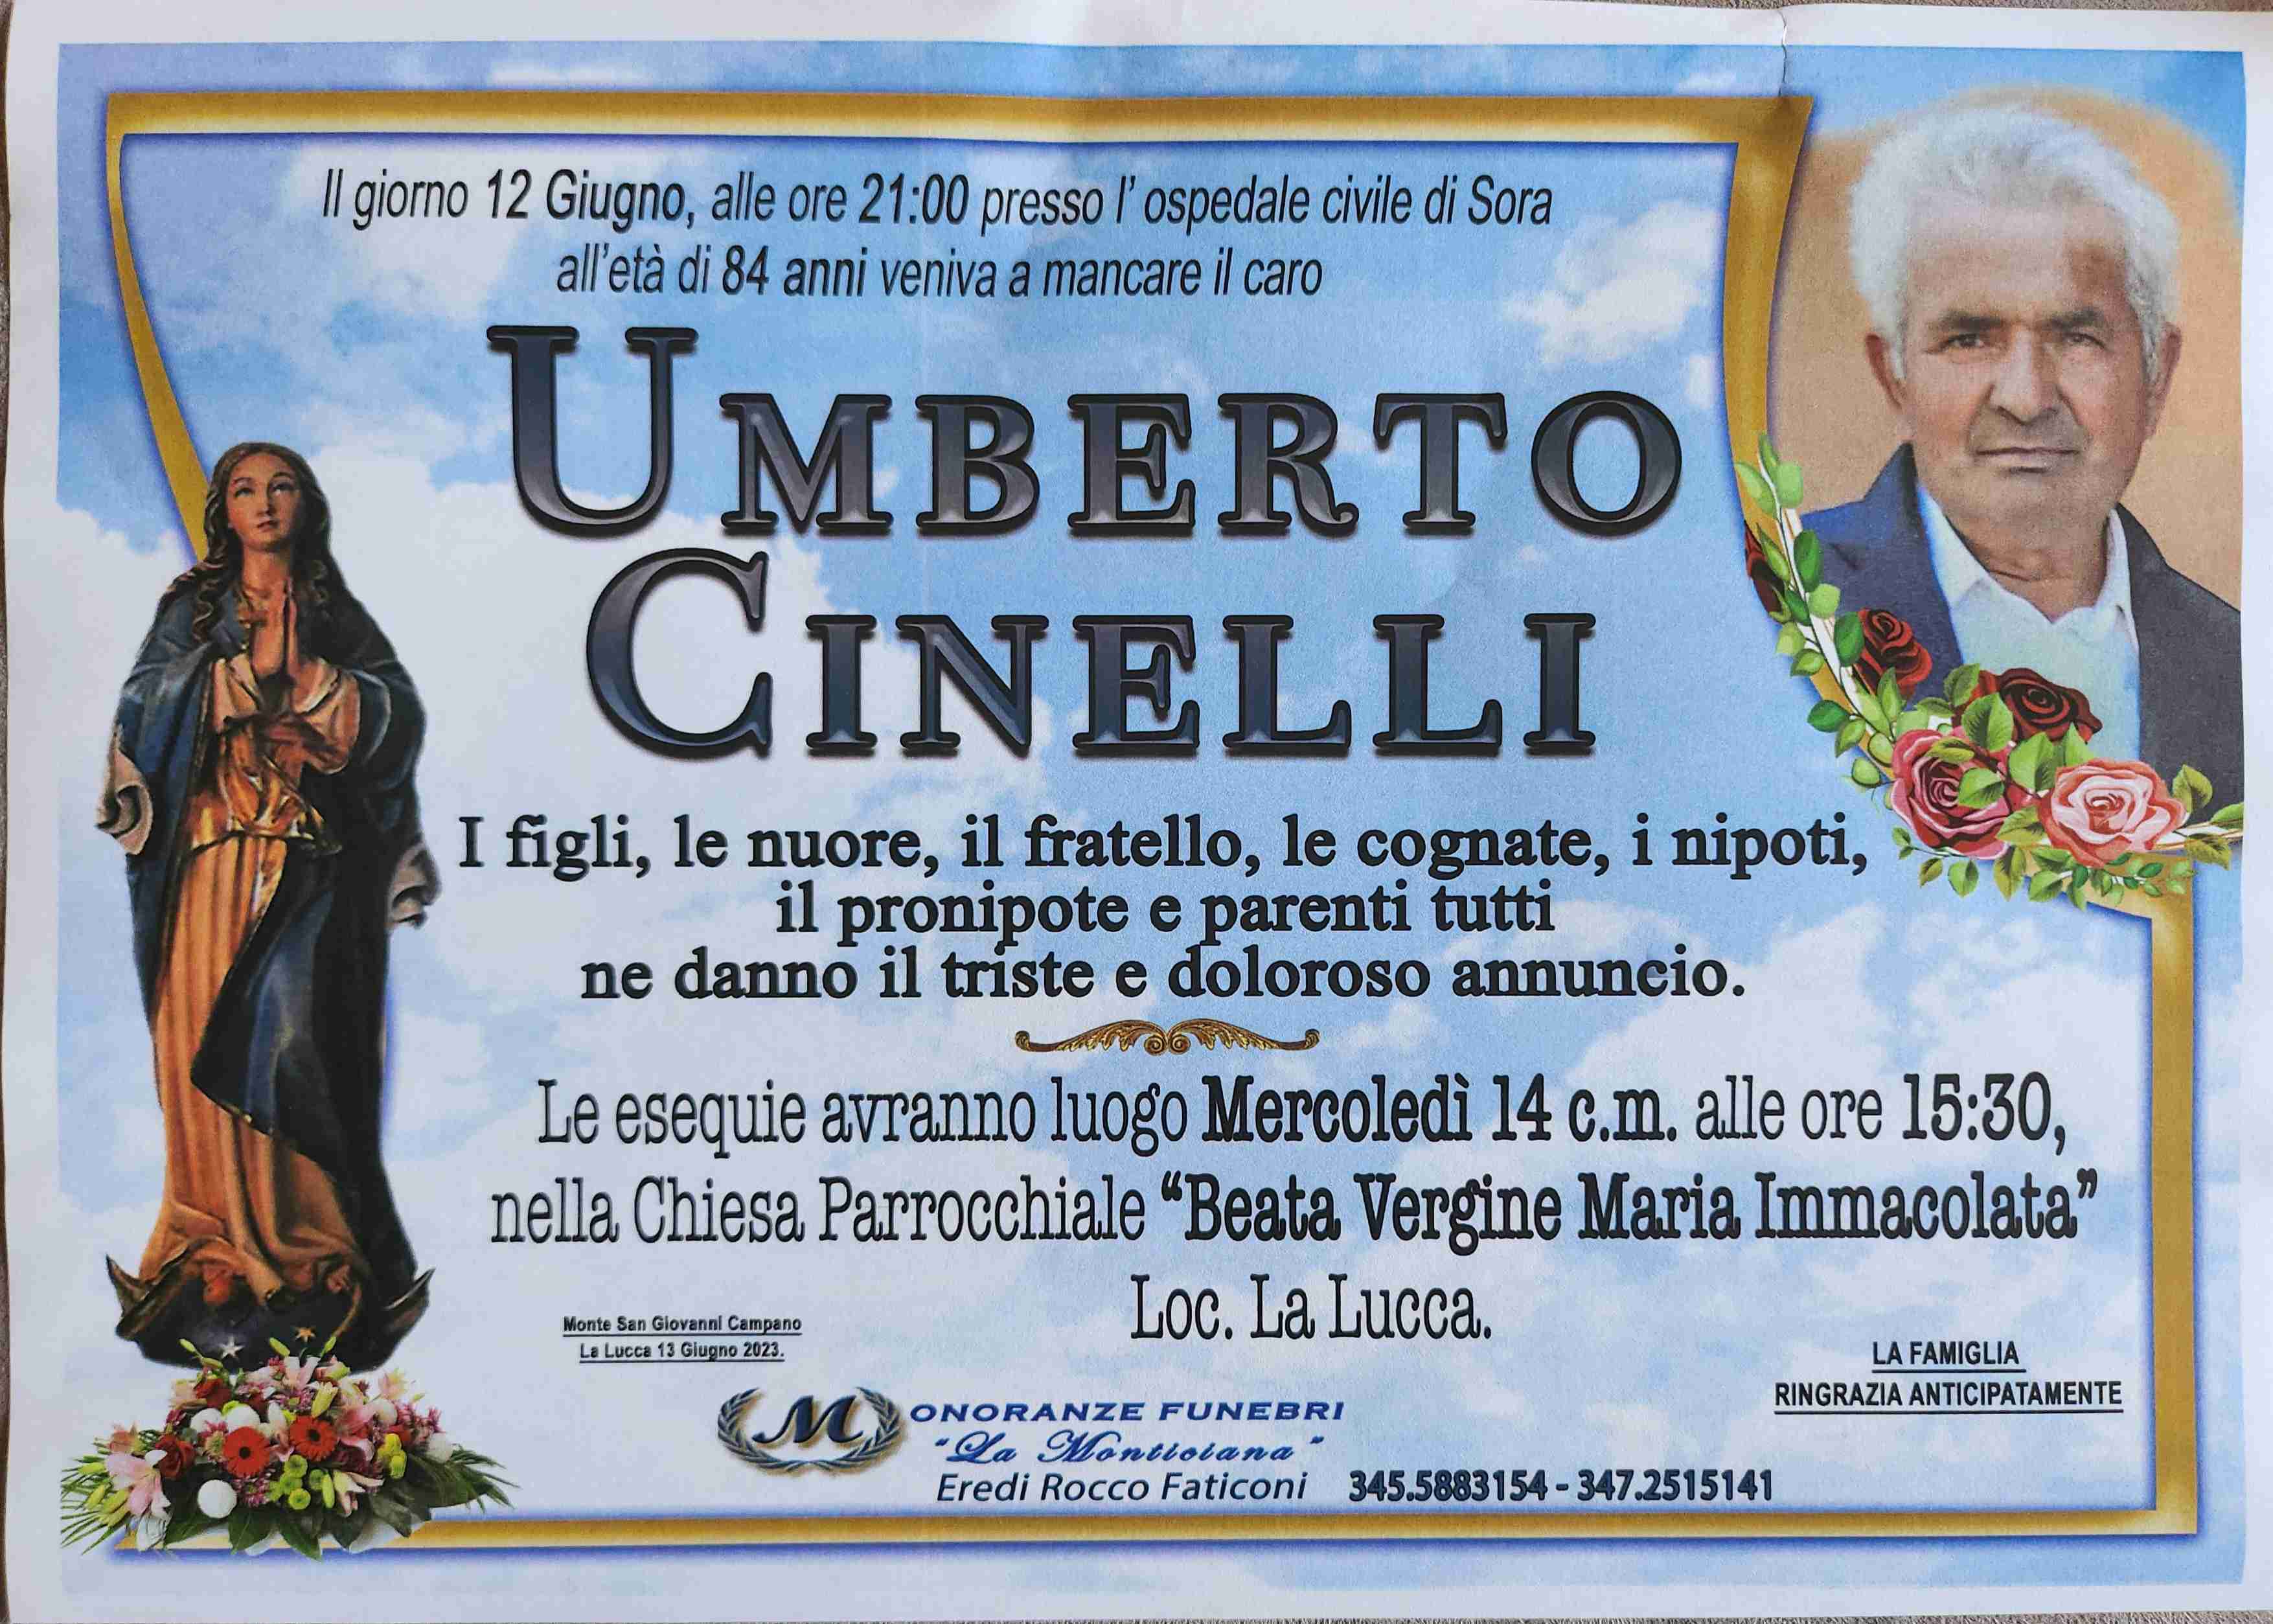 Umberto Cinelli